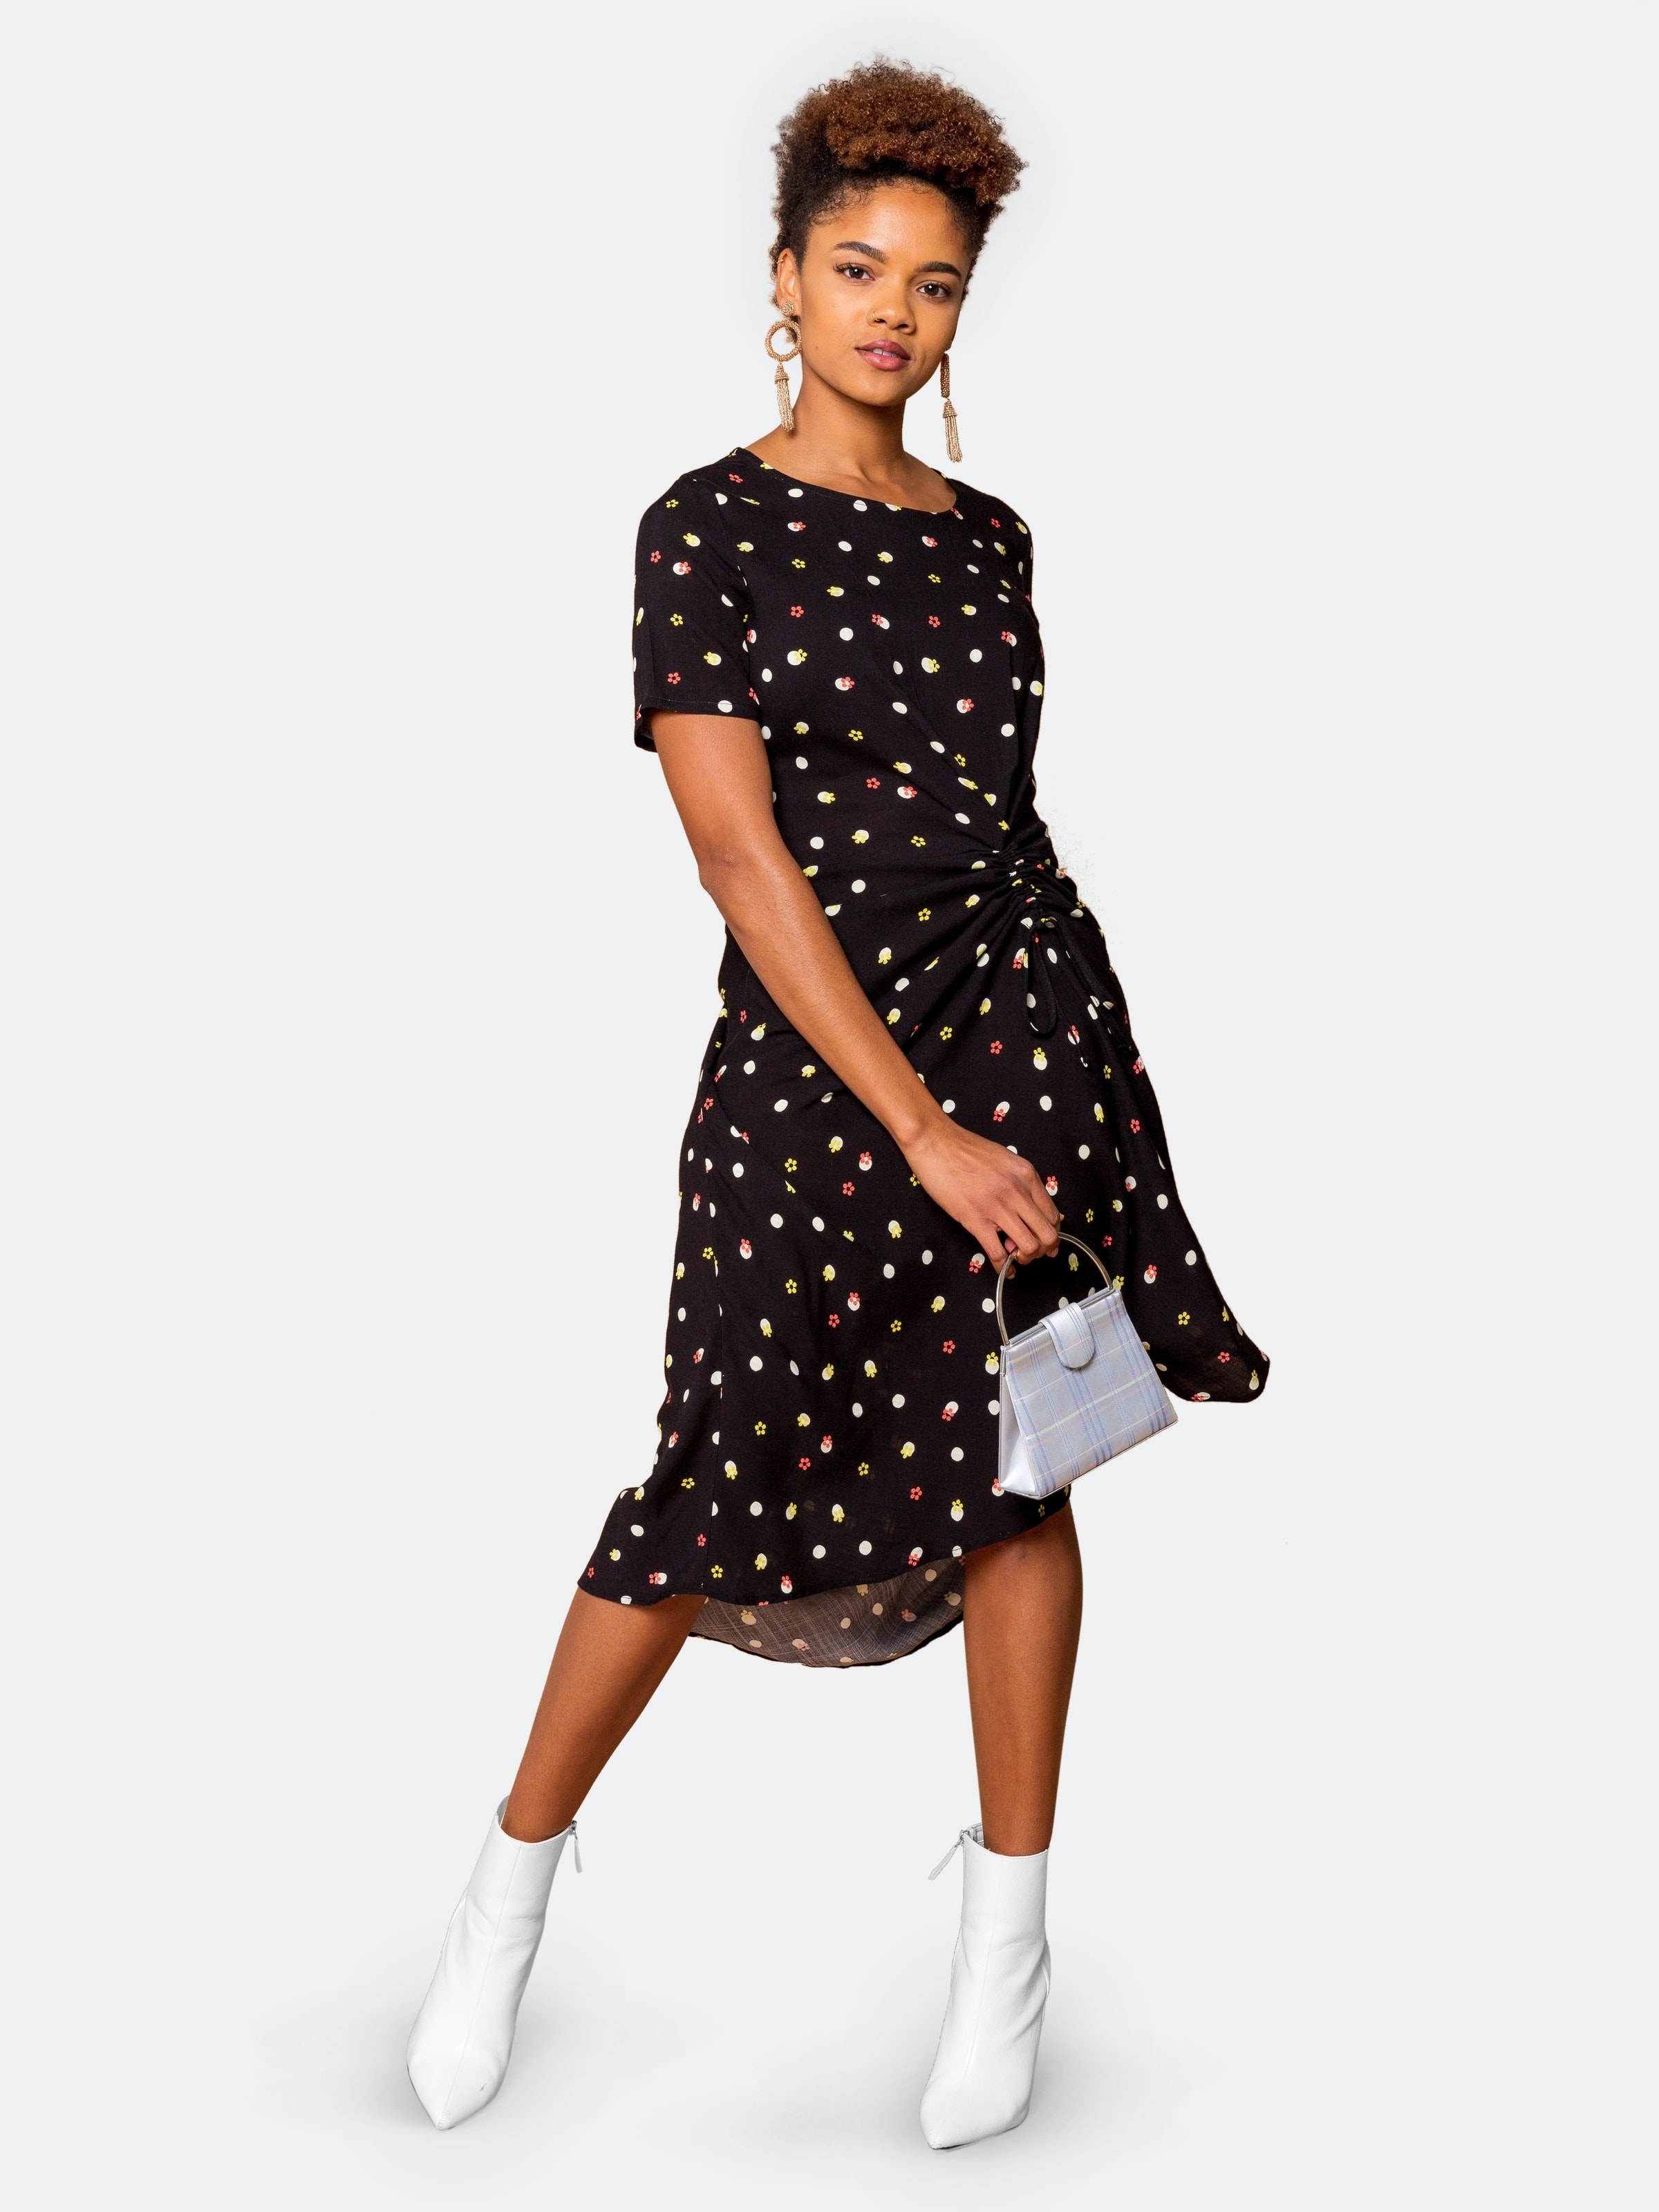 model wearing the polka dot dress